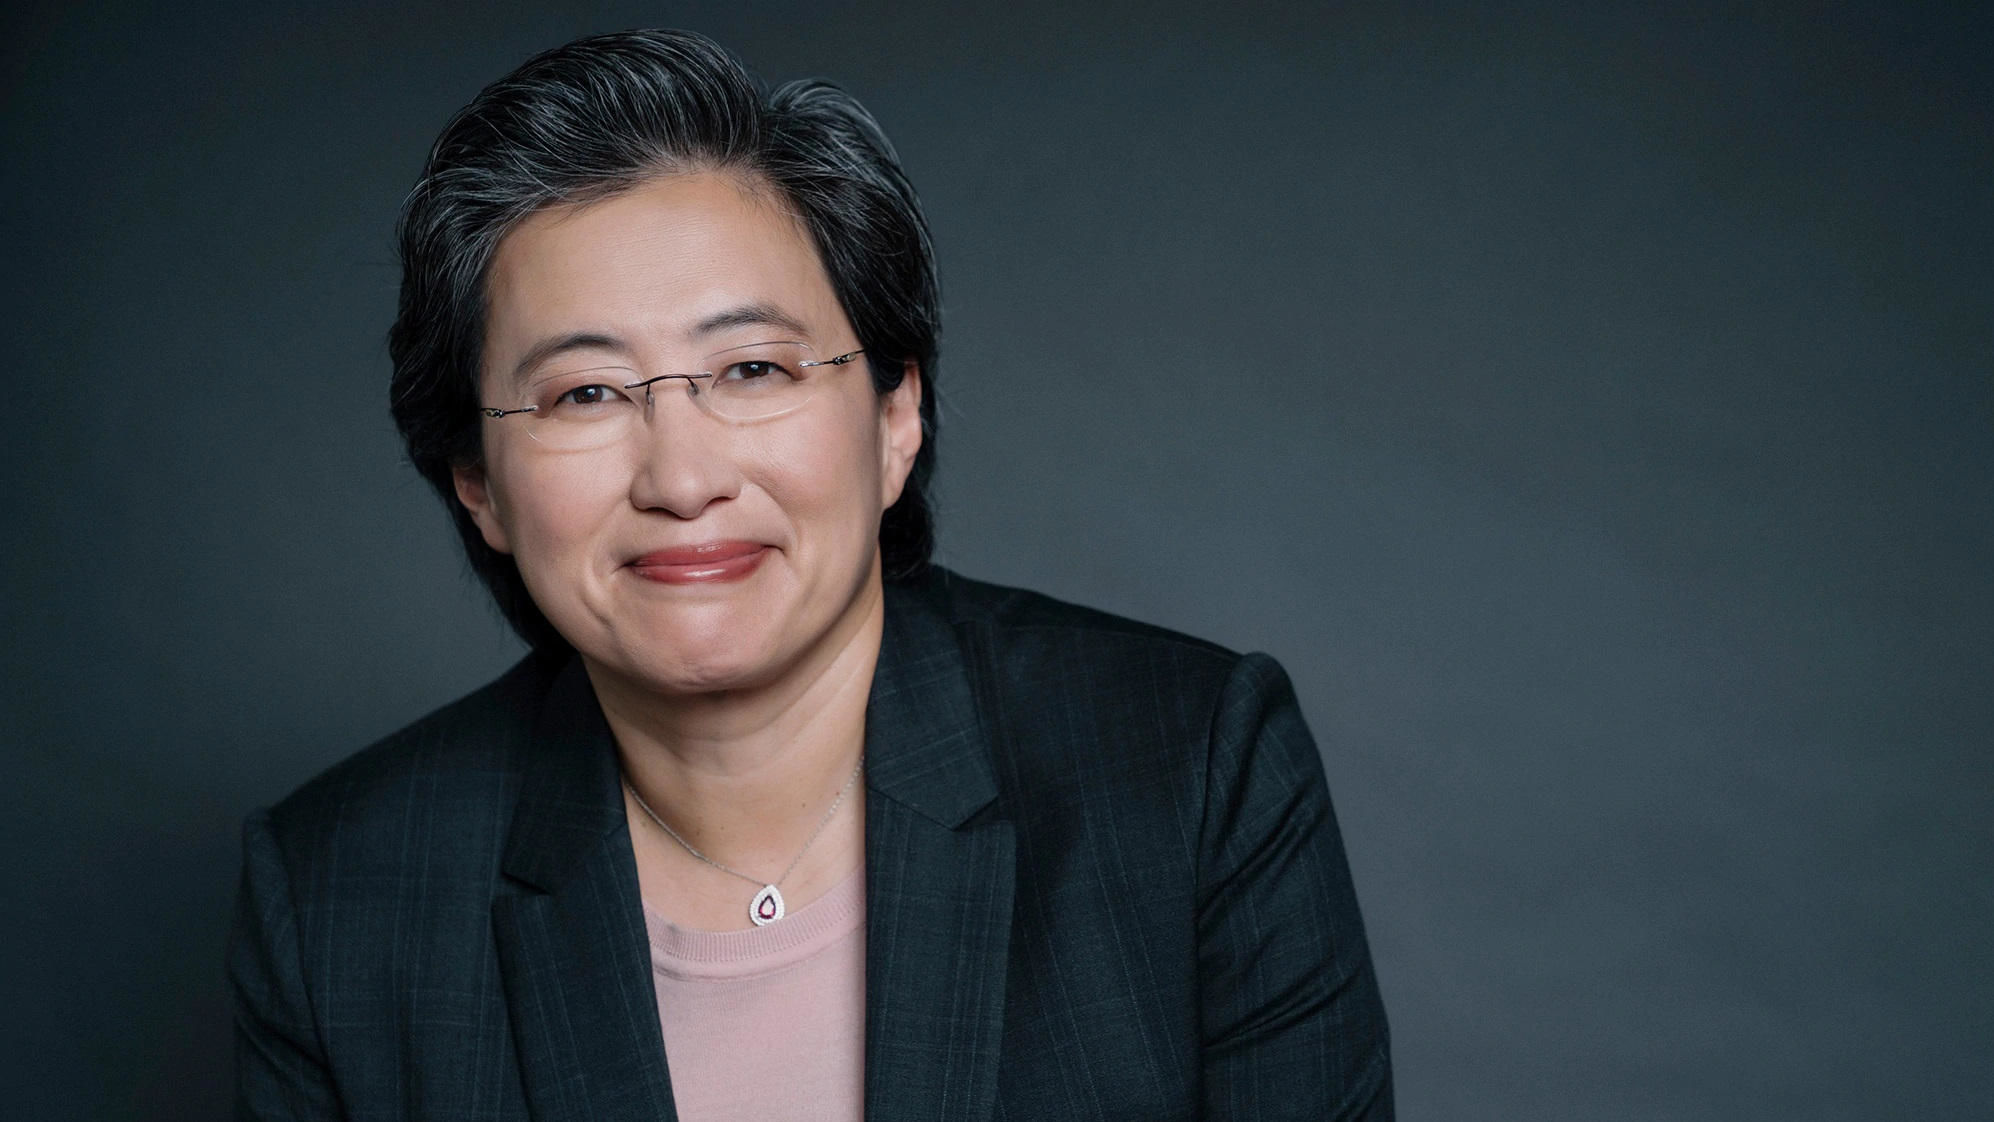 More information about "Το δικτυακό Fortune αποκαλεί τη CEO της AMD ως "μία από τις ισχυρότερες γυναίκες στην παγκόσμια επιχειρηματικότητα""